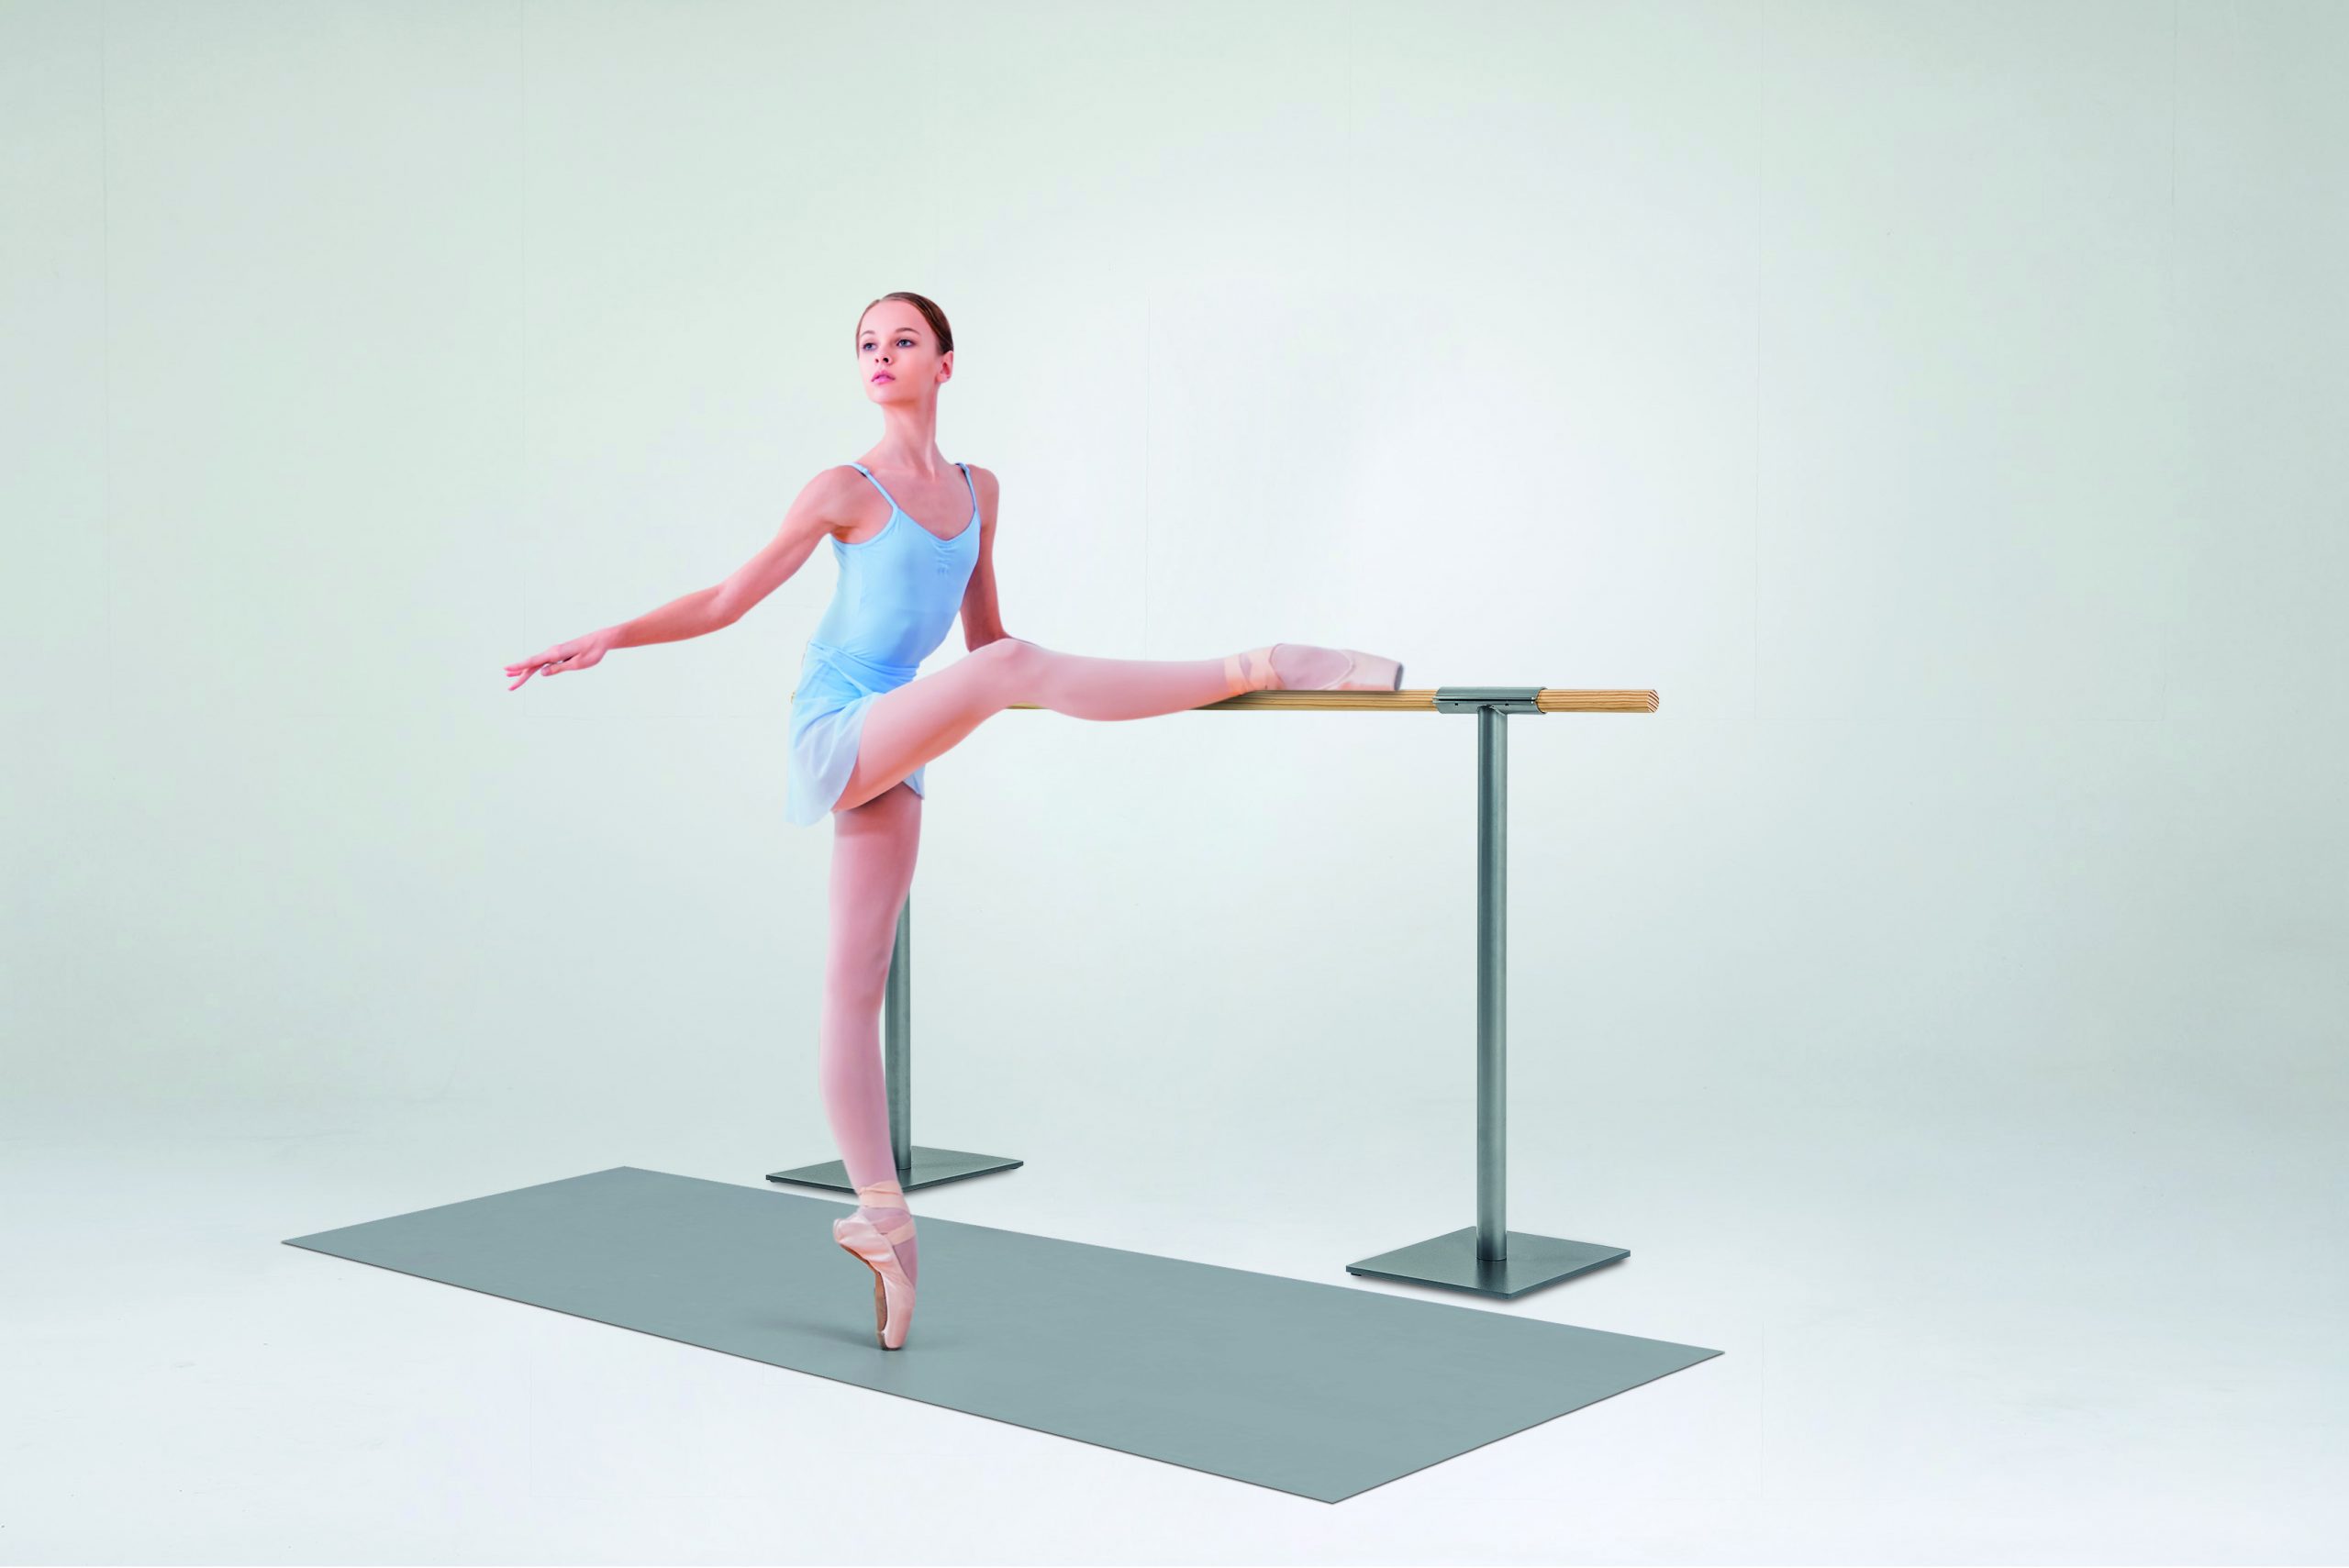 Barra ballet móvil prima uso domestico.